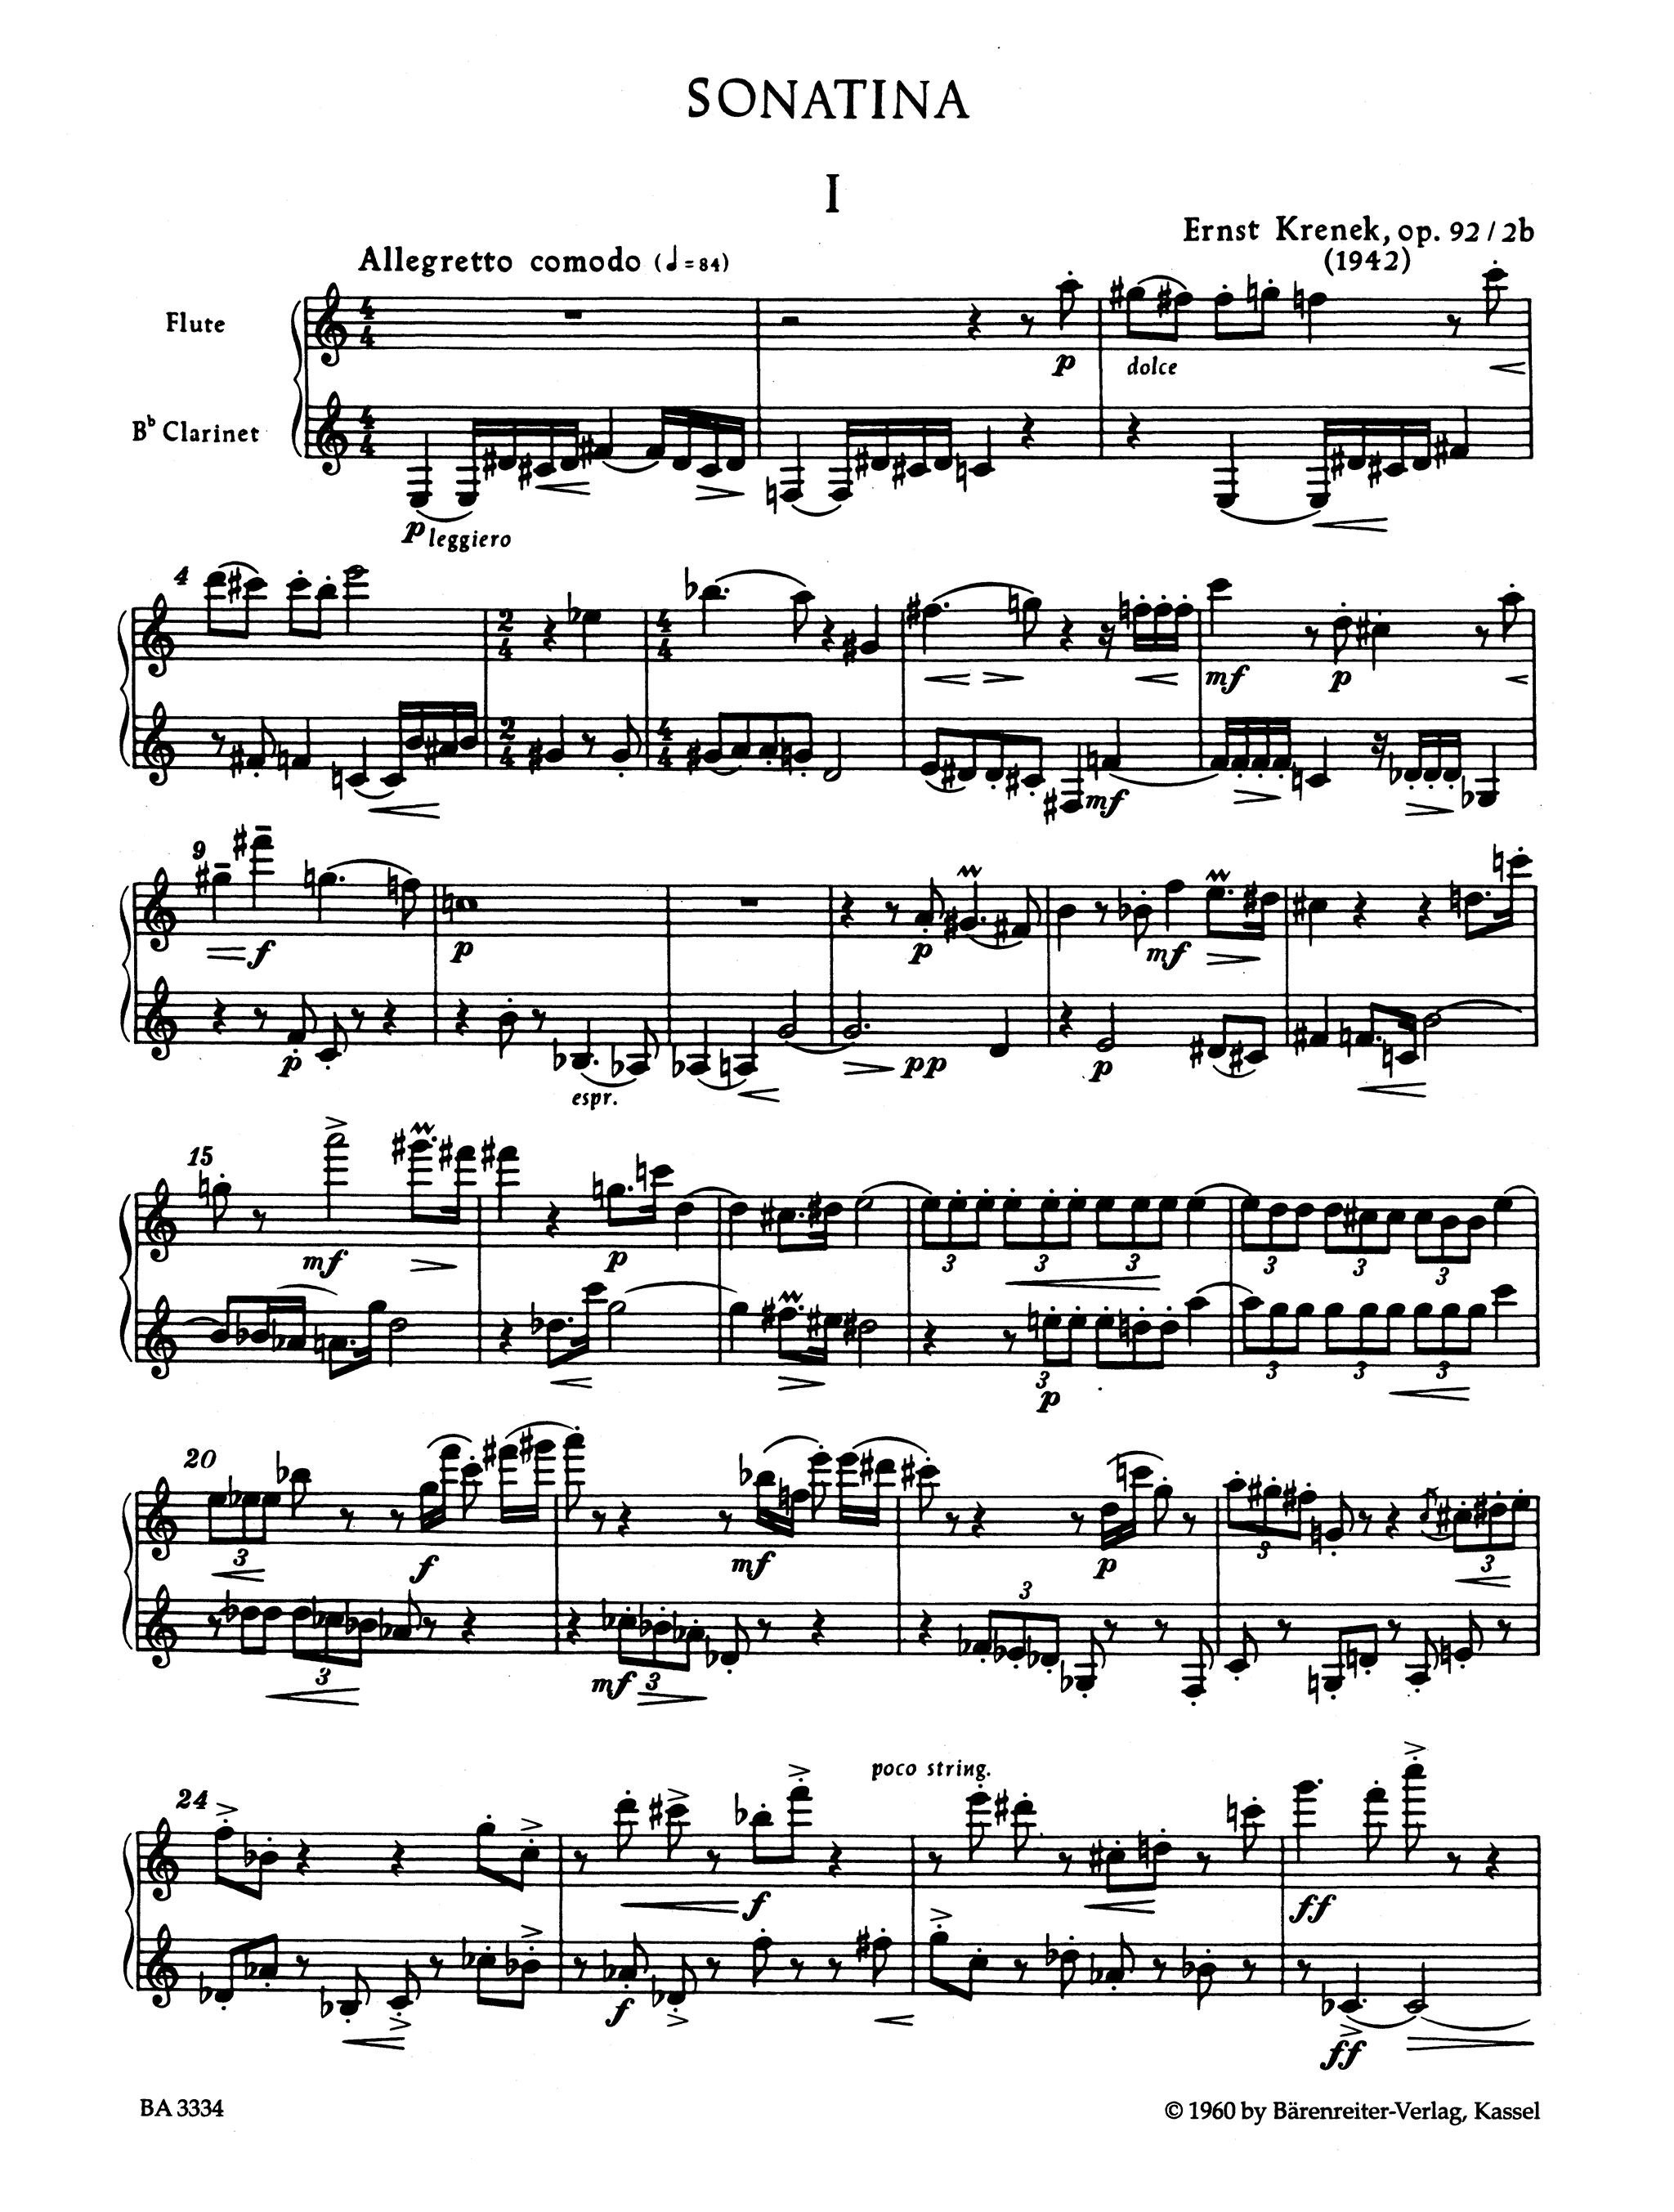 Krenek Sonatina, Op. 92/2b - Movement 1